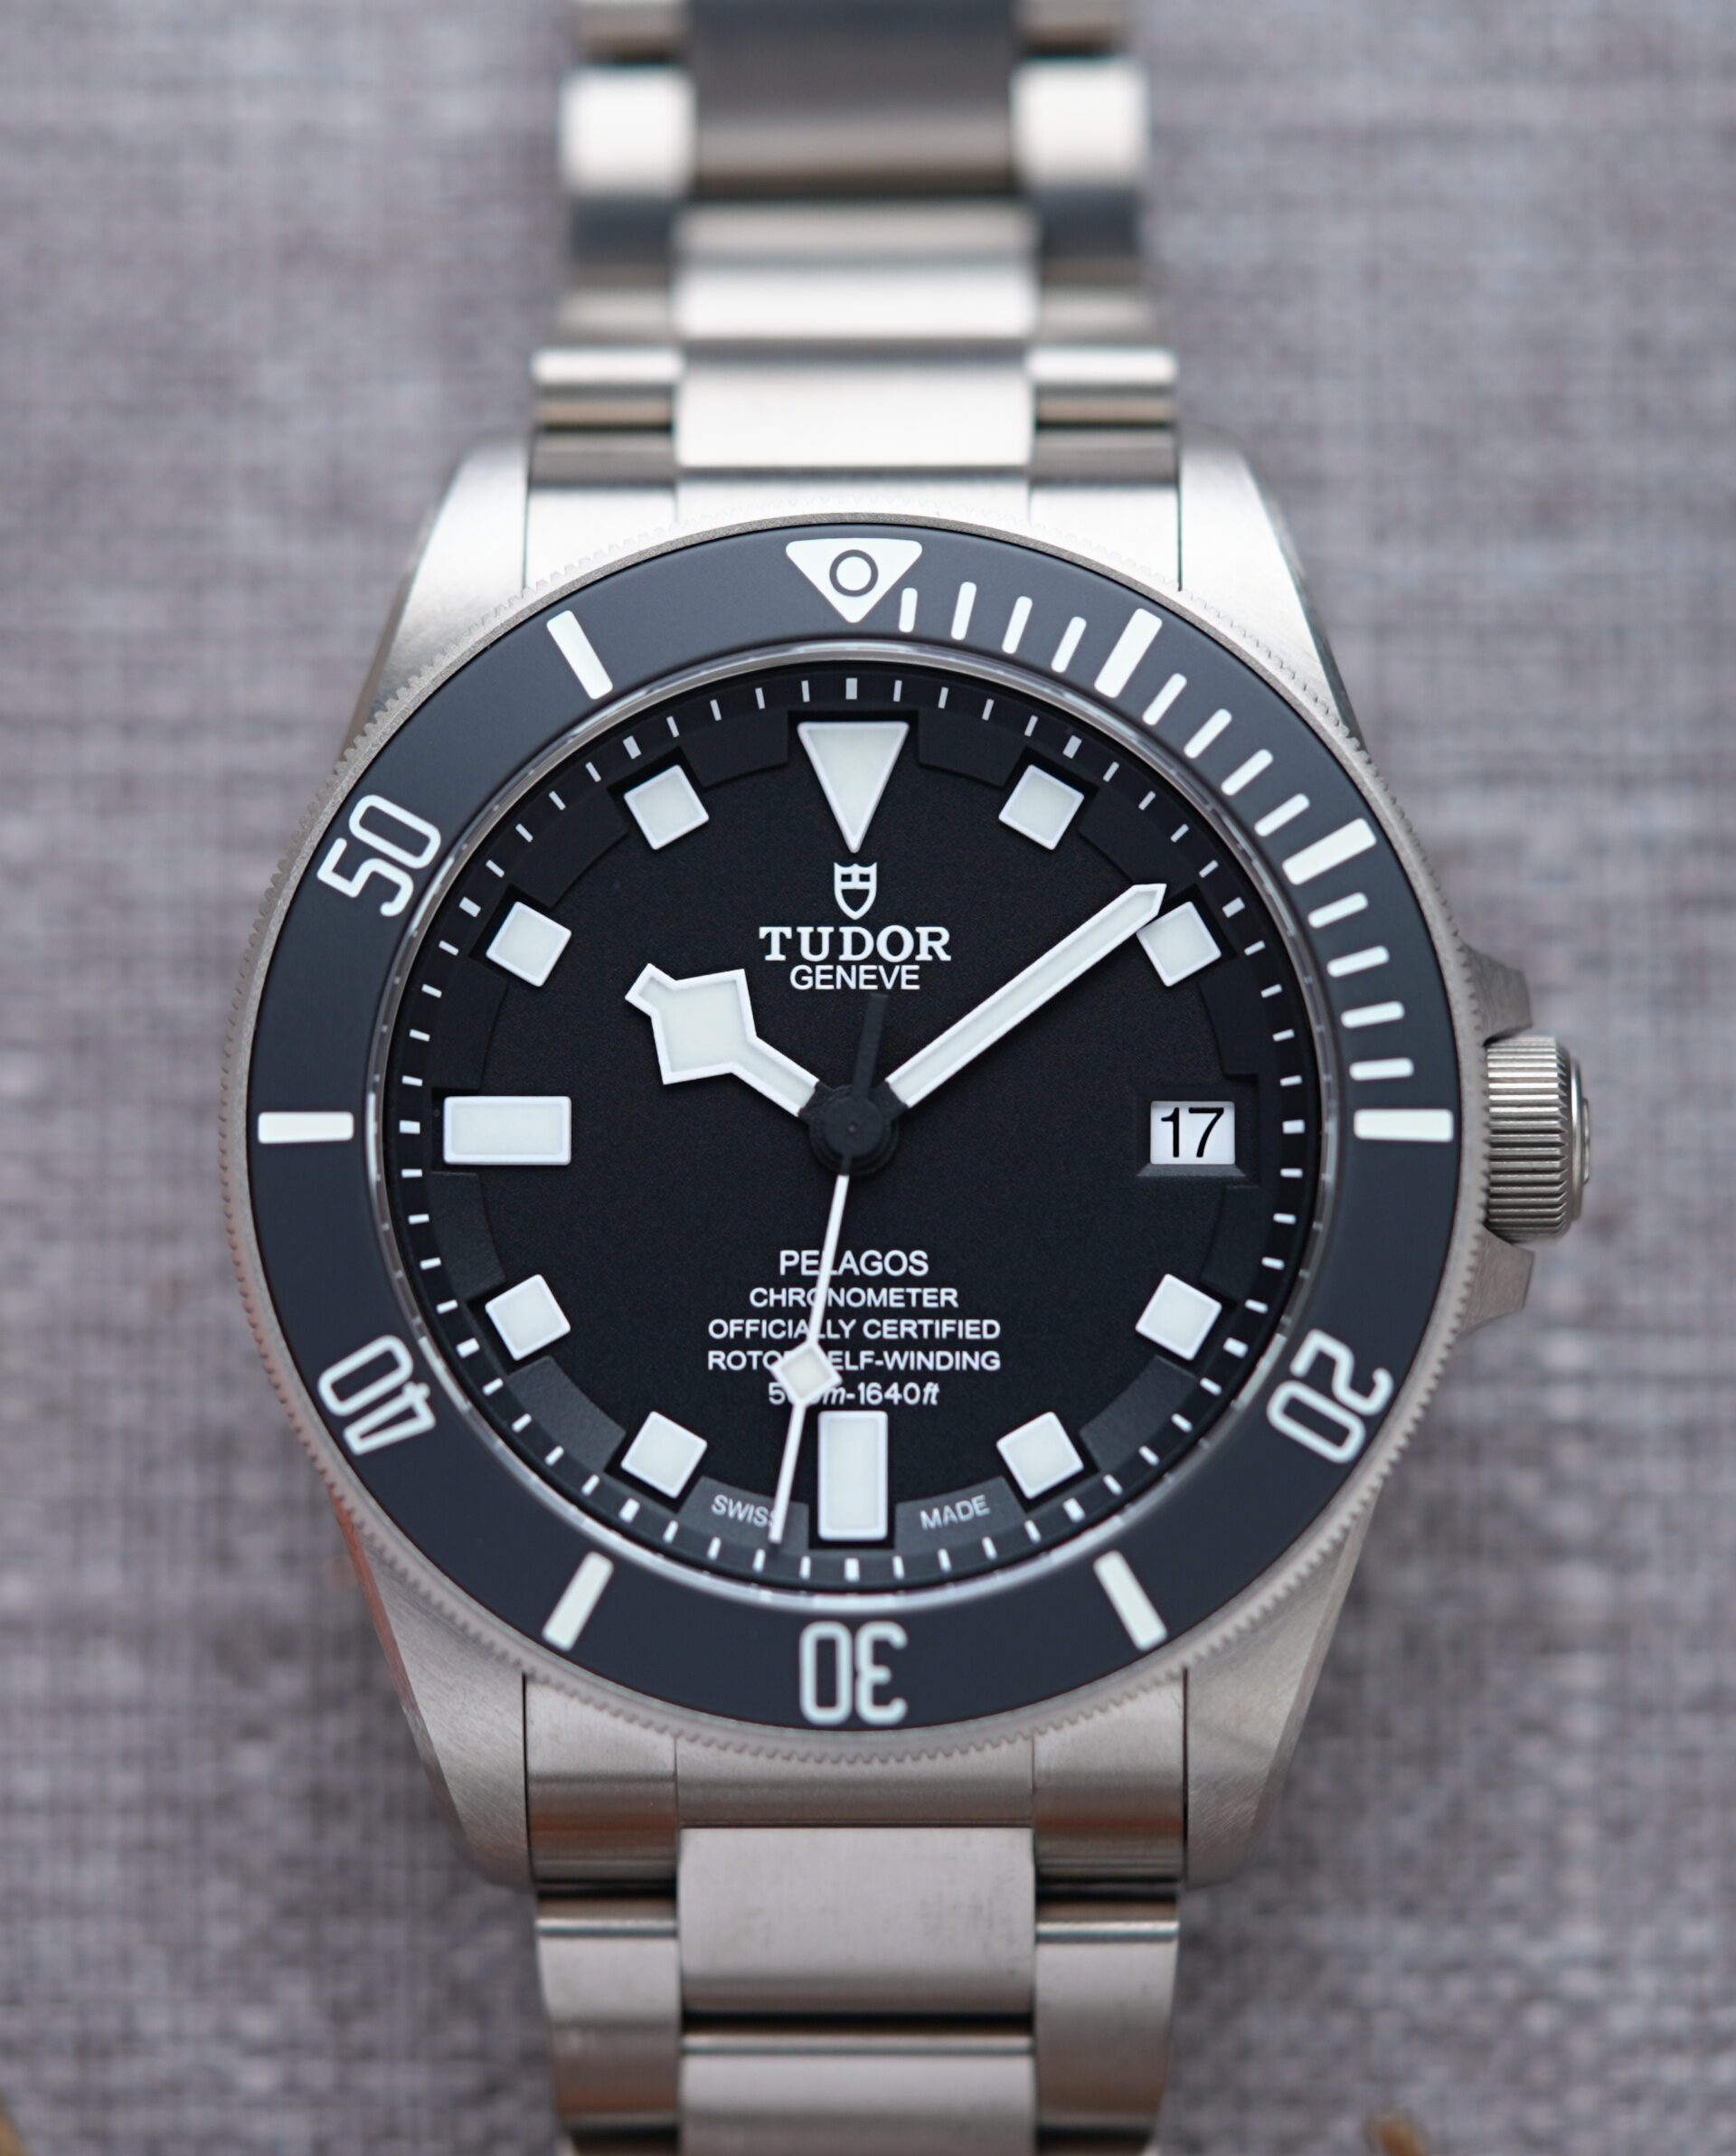 Tudor Pelagos 25600TN watch featured under white lighting.